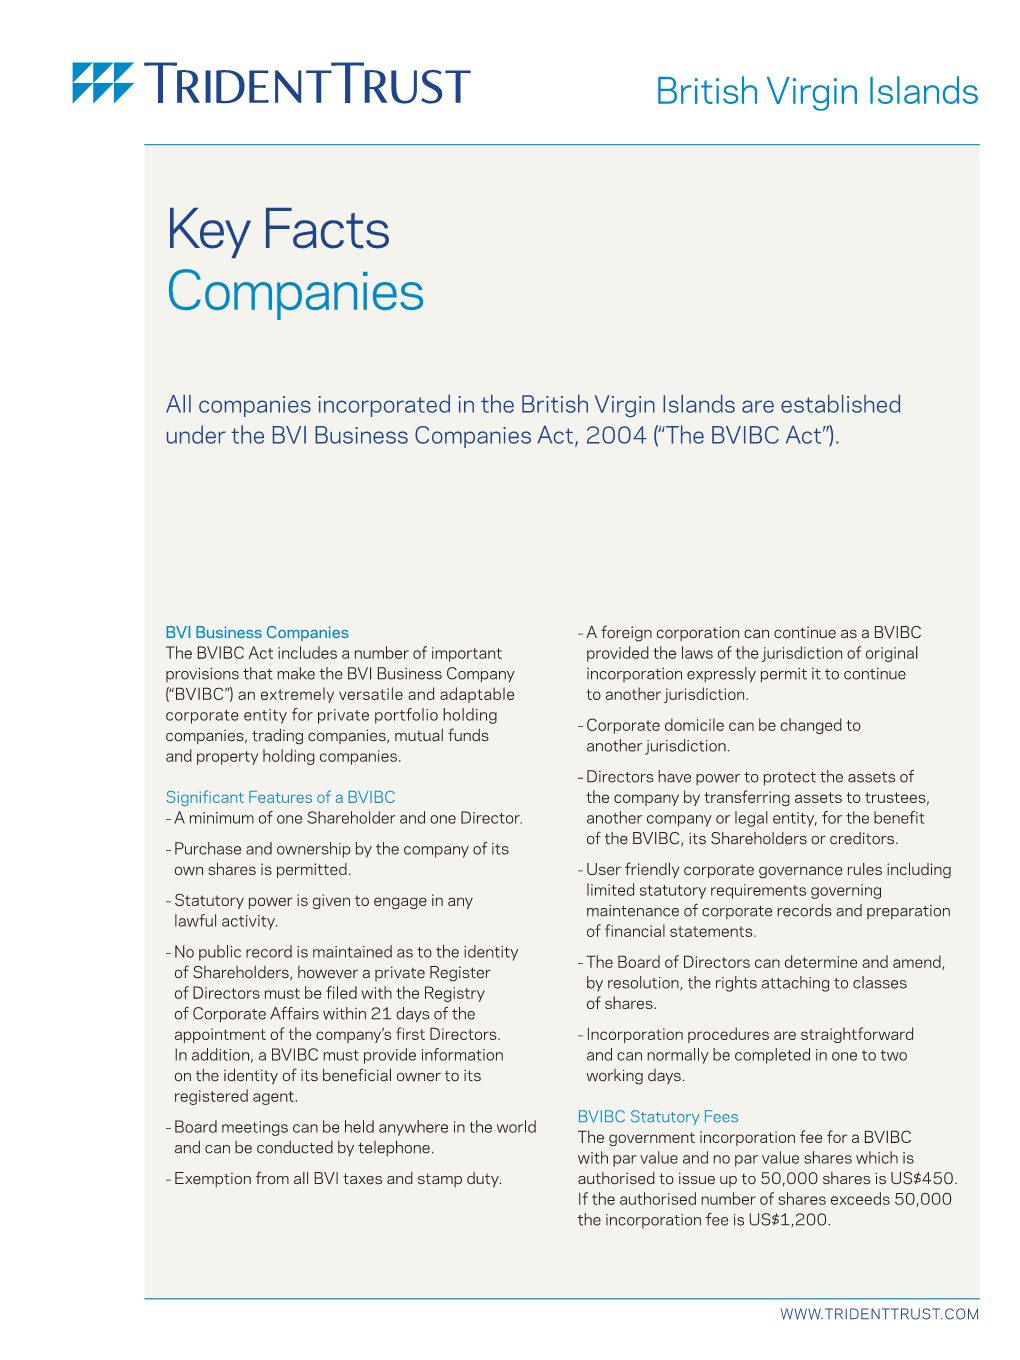 British Virgin Islands Companies Key Facts